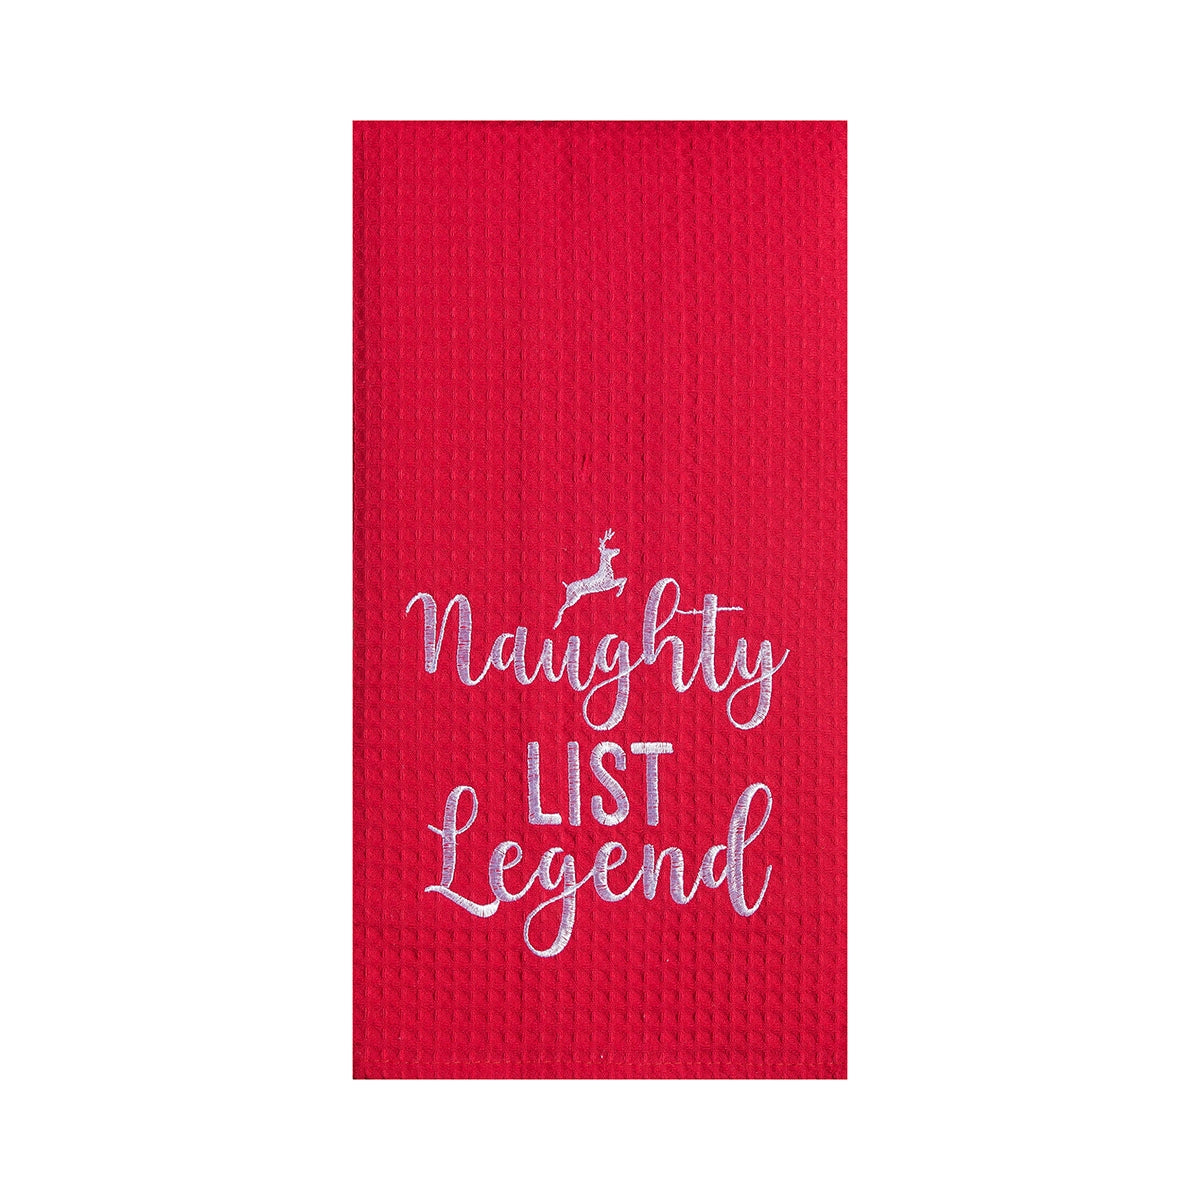 Naughty List Legend Towel